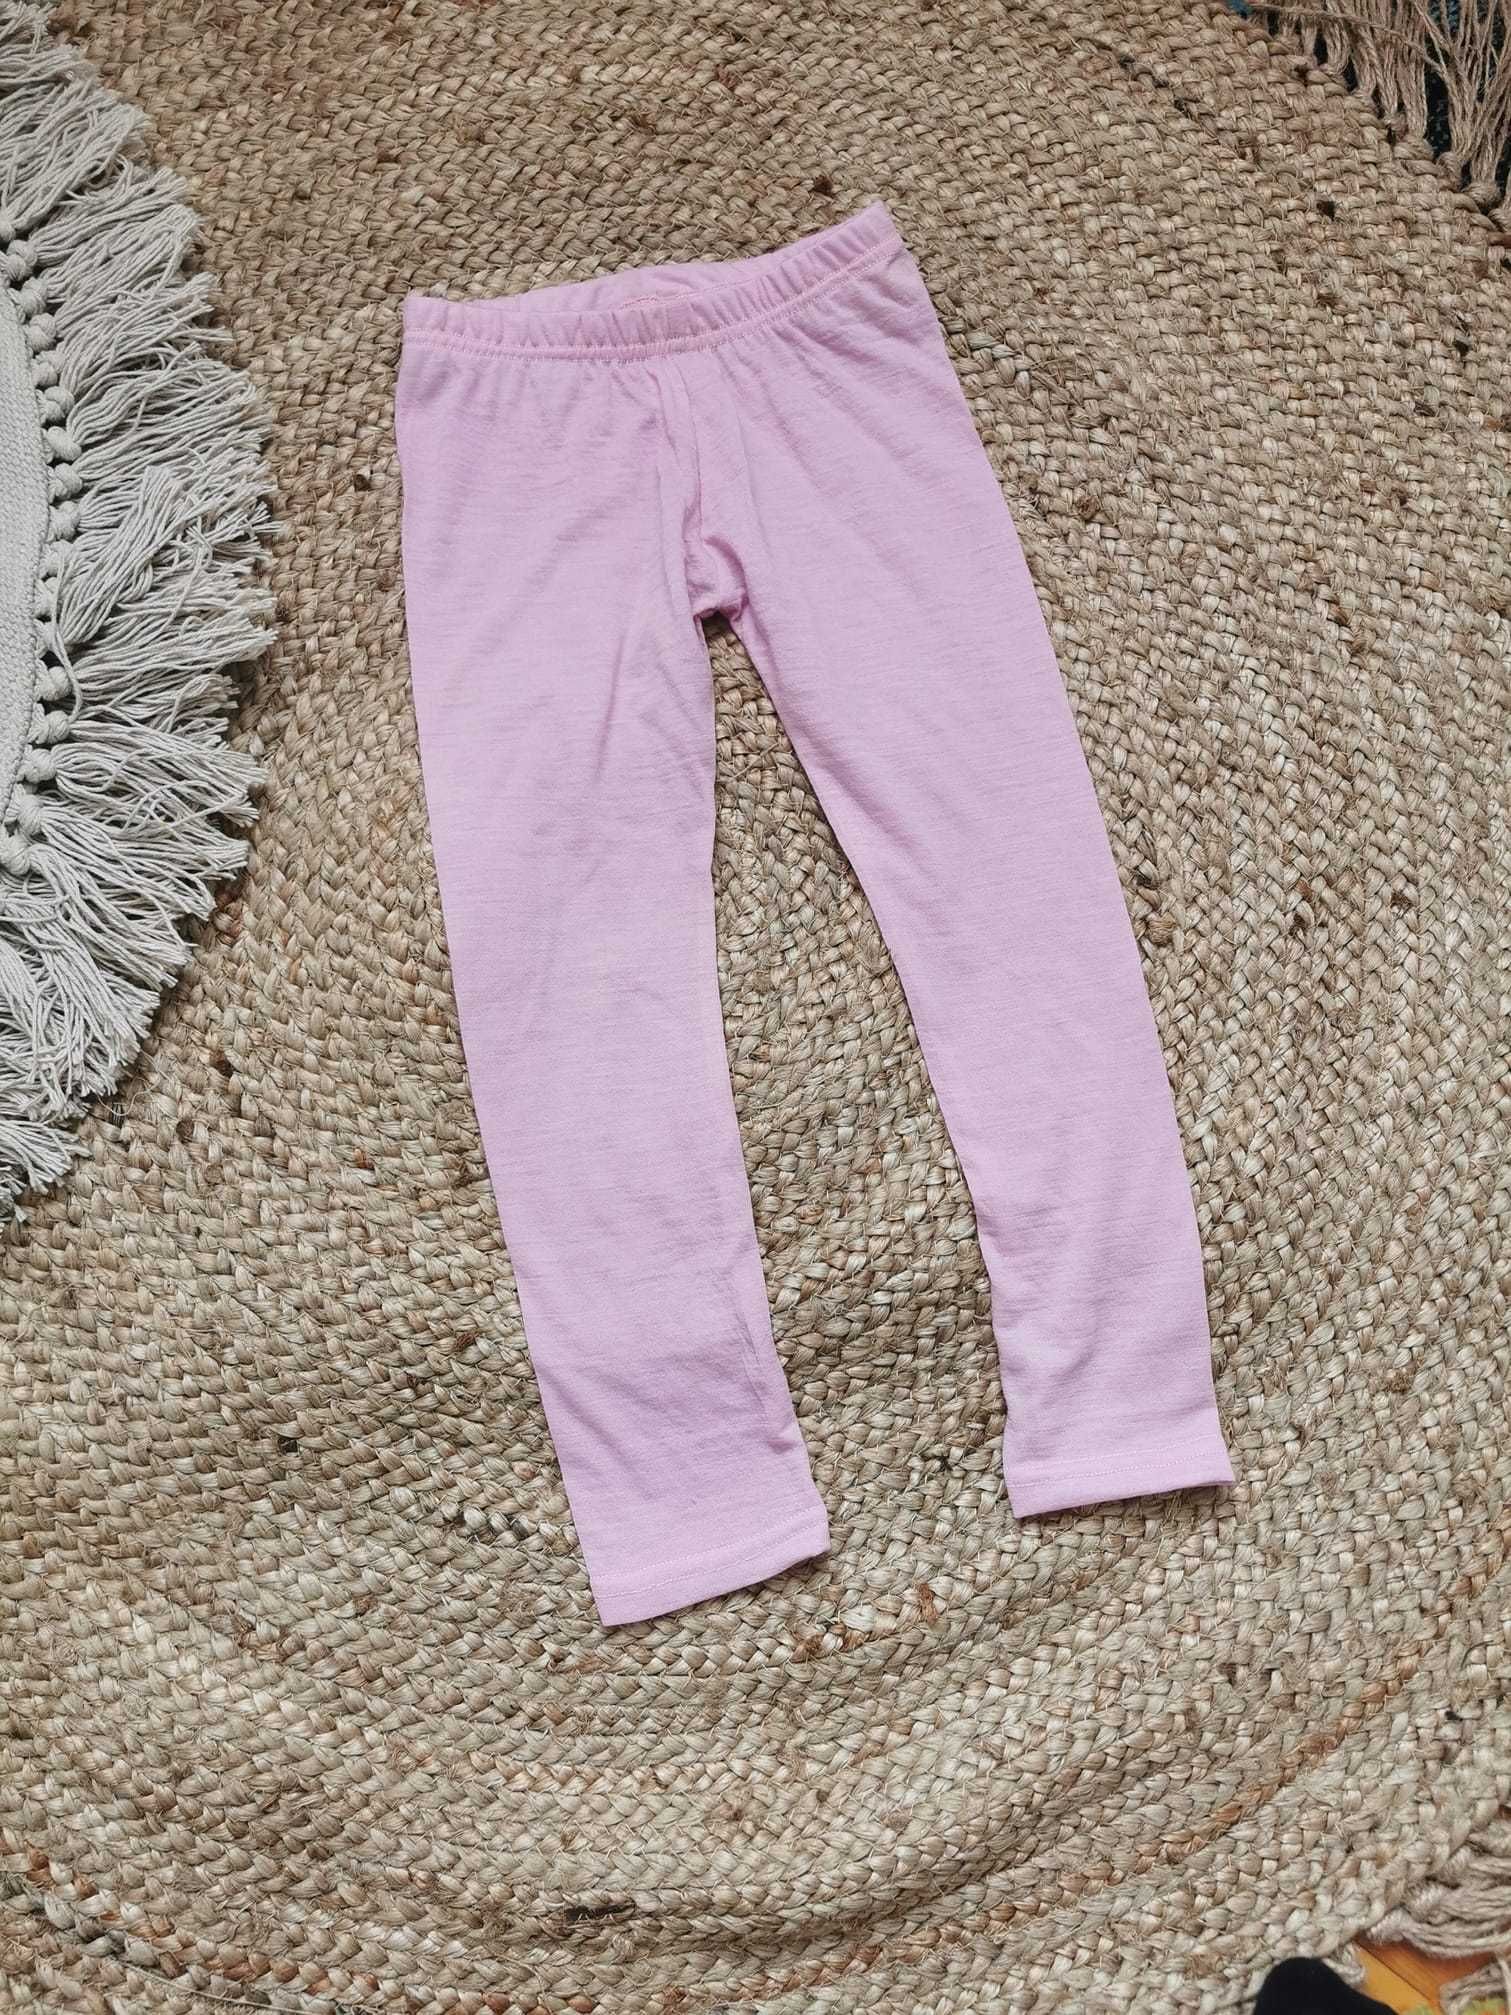 Pantaloni din lana roz copii 104cm subtiri